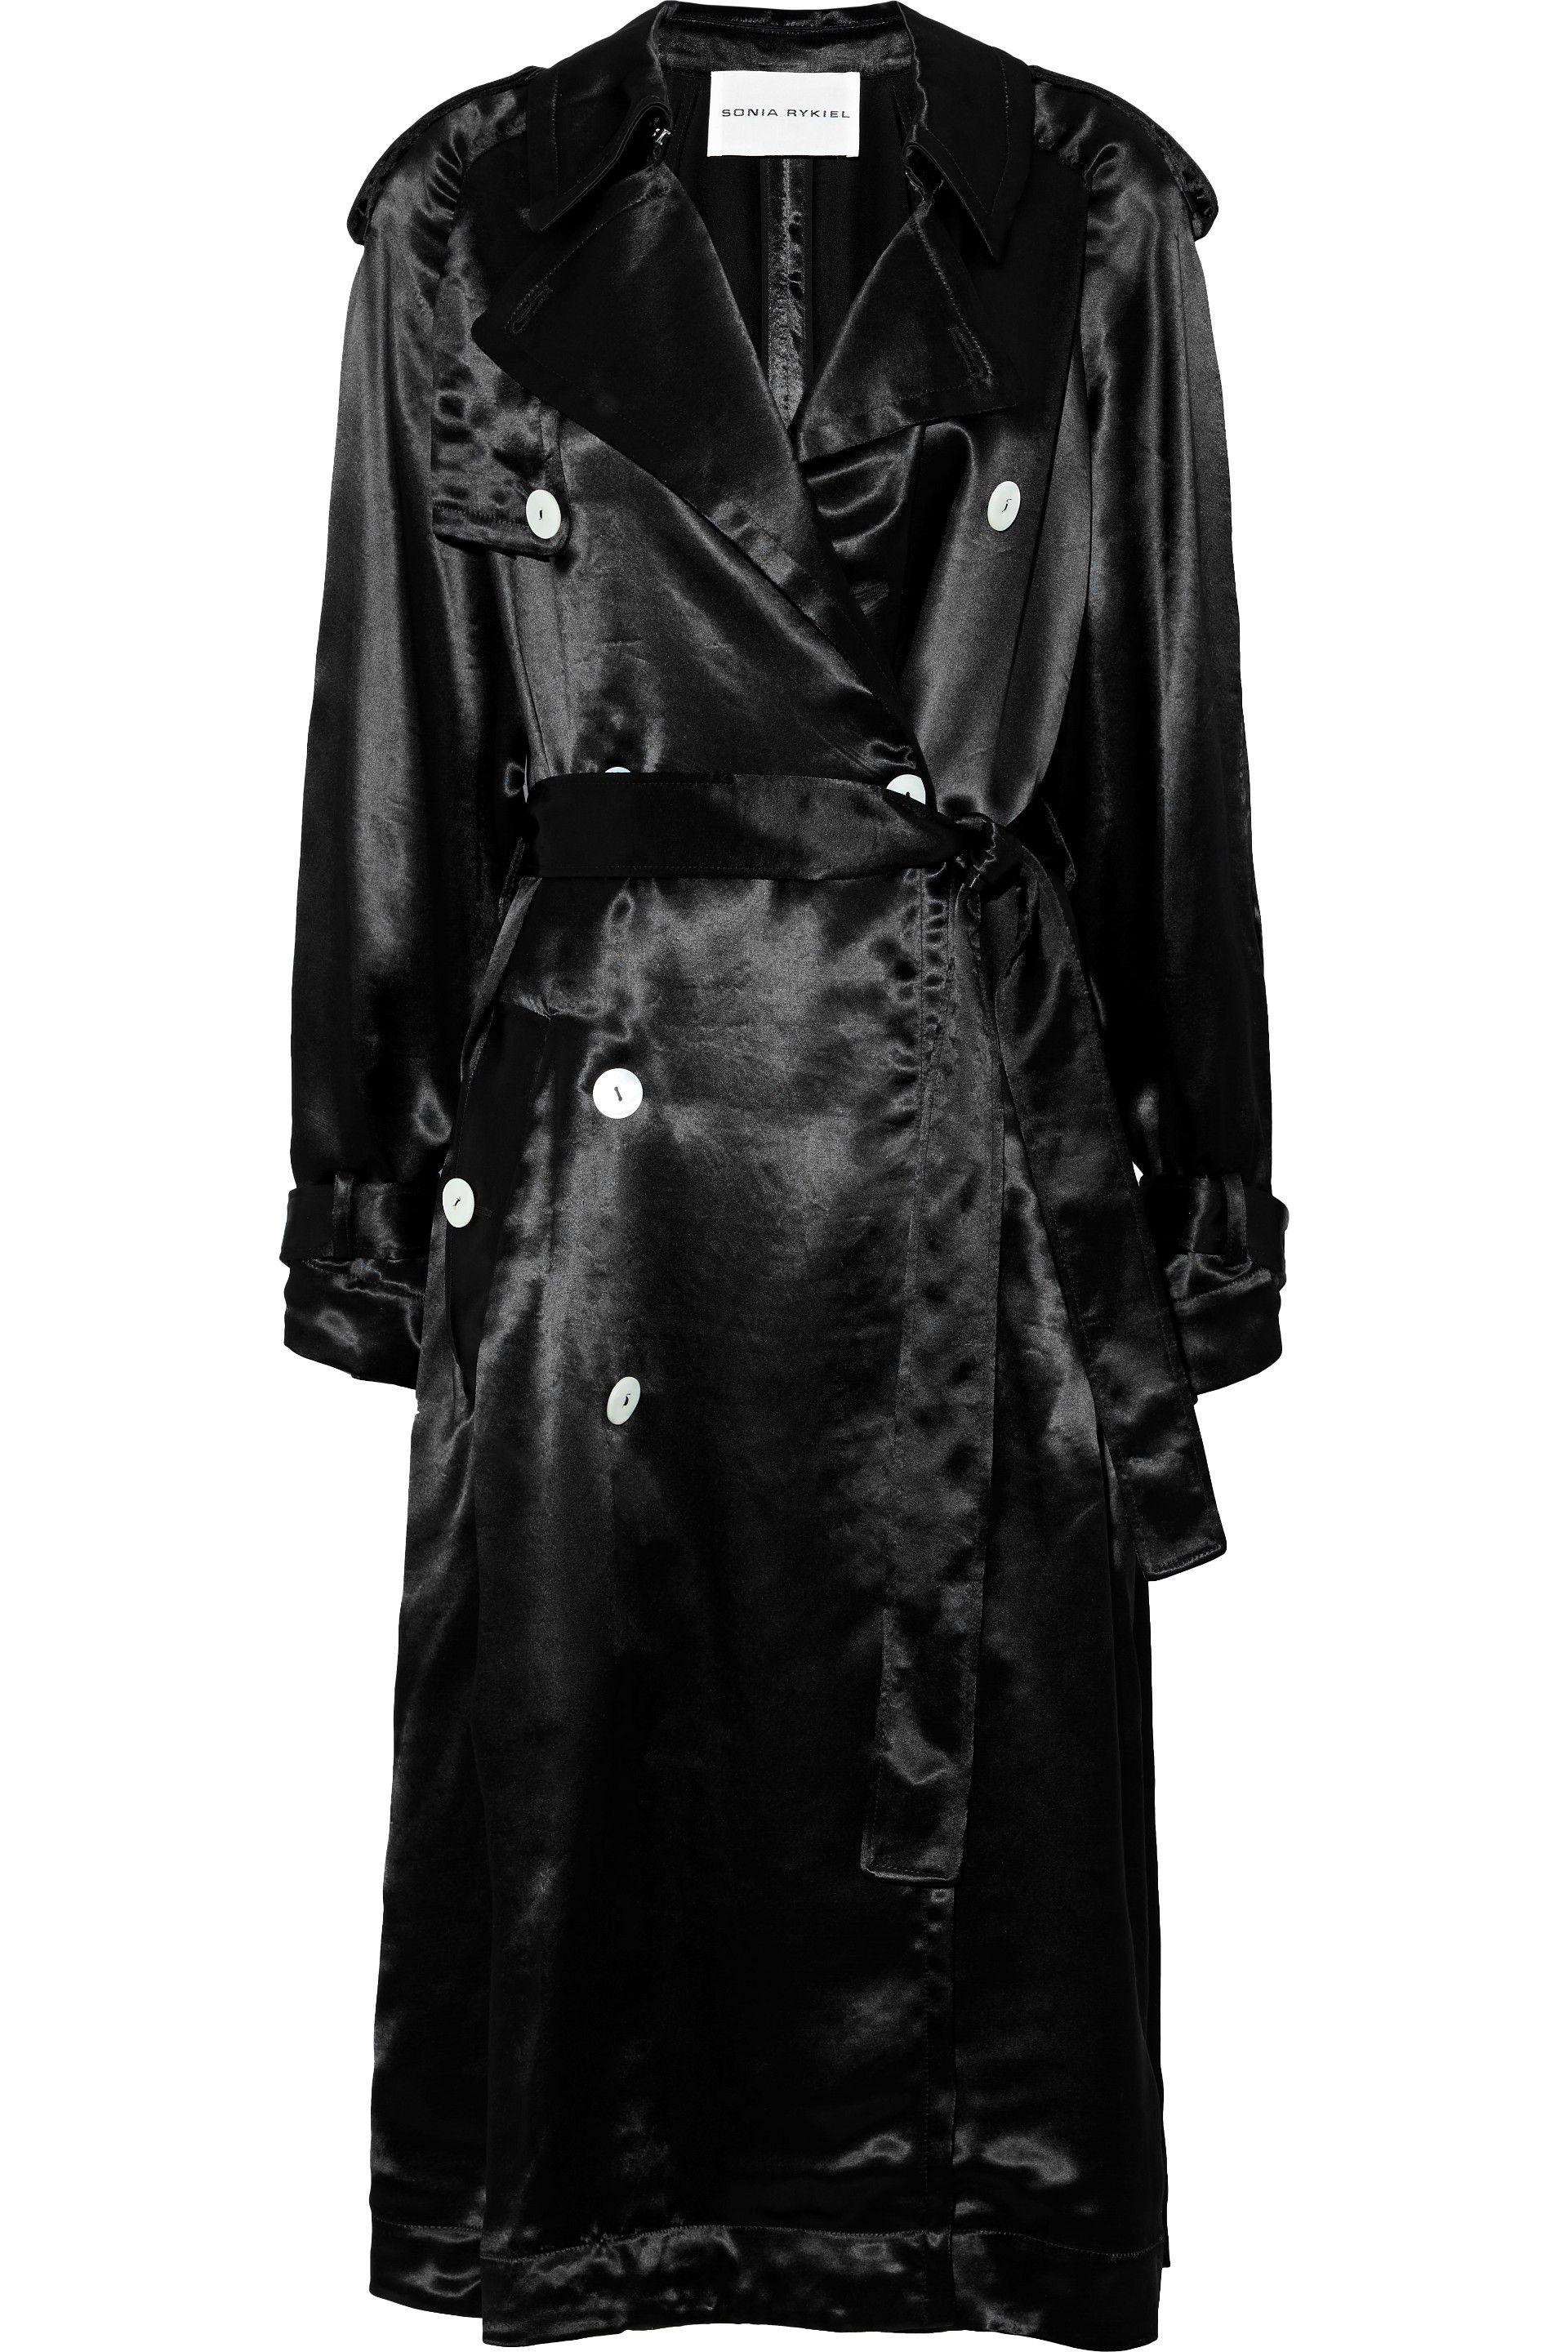 Sonia Rykiel Satin Trench Coat Black - Lyst